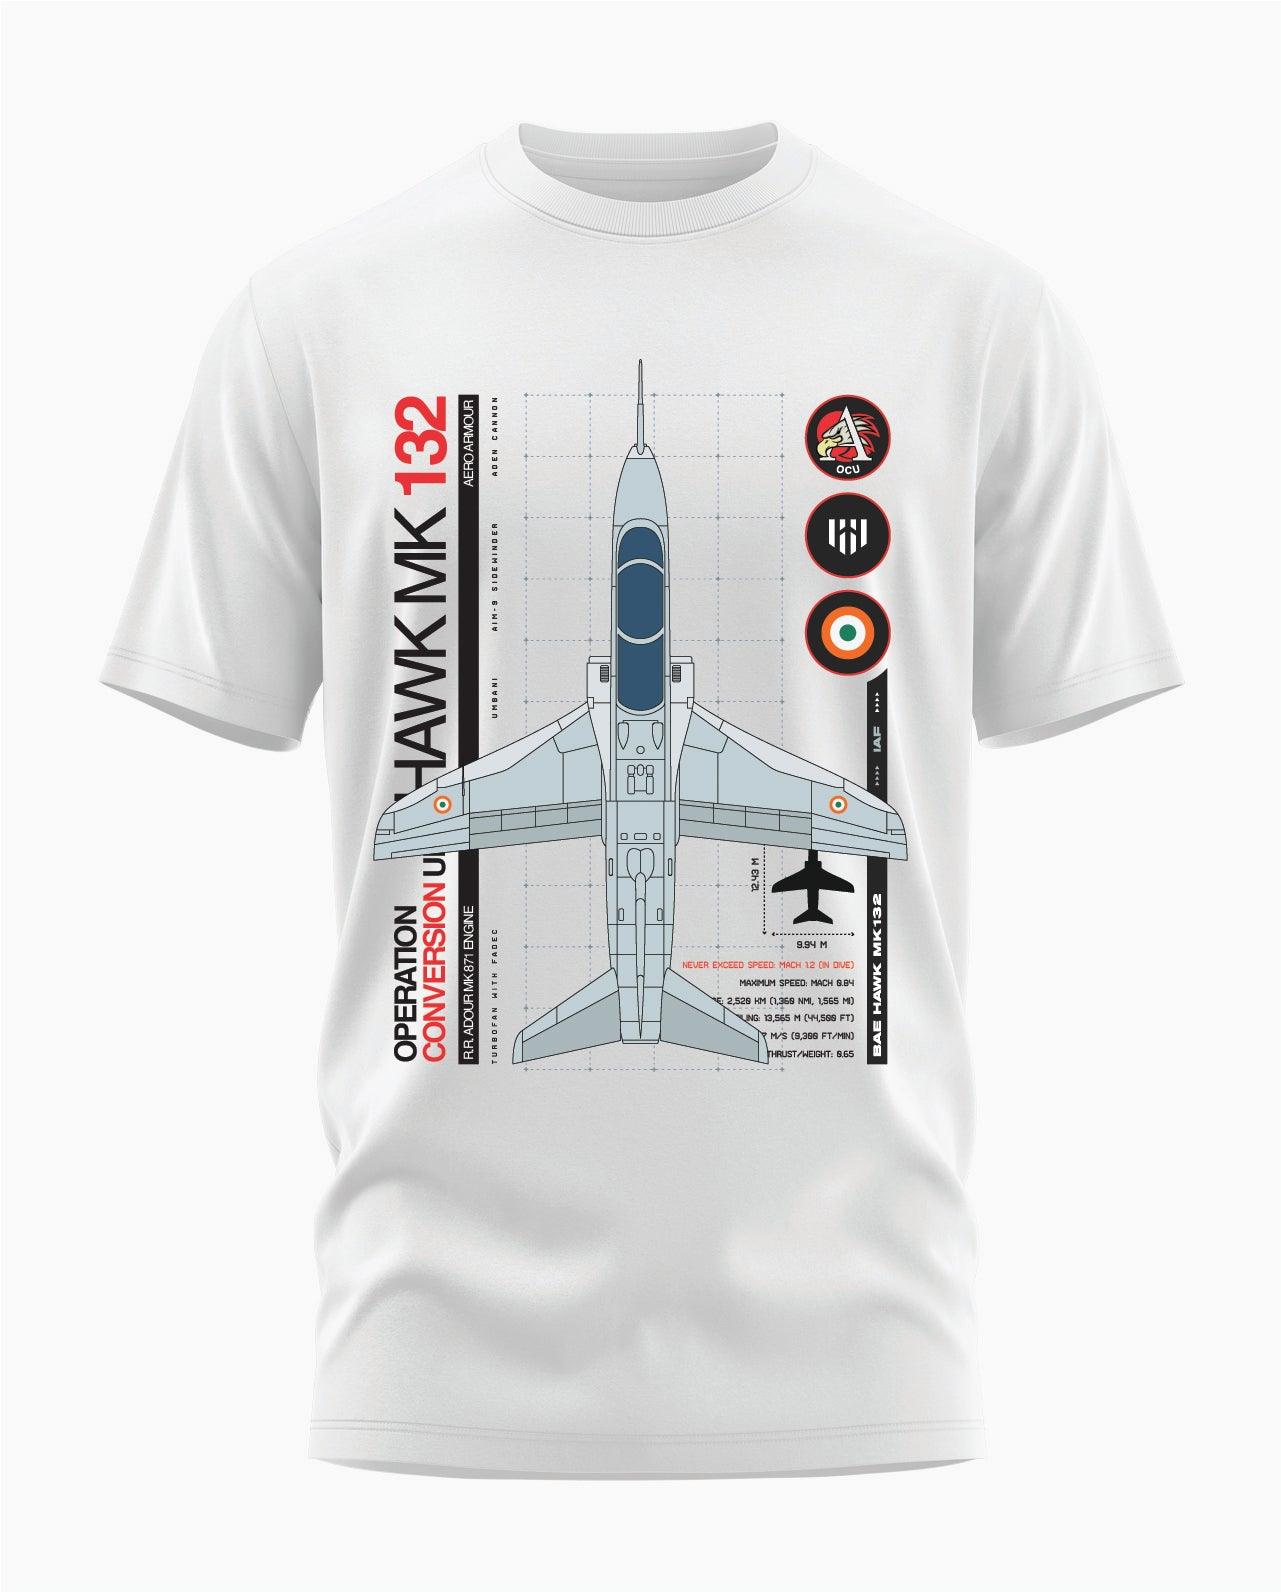 OCU HAWK MK132 T-Shirt - Aero Armour